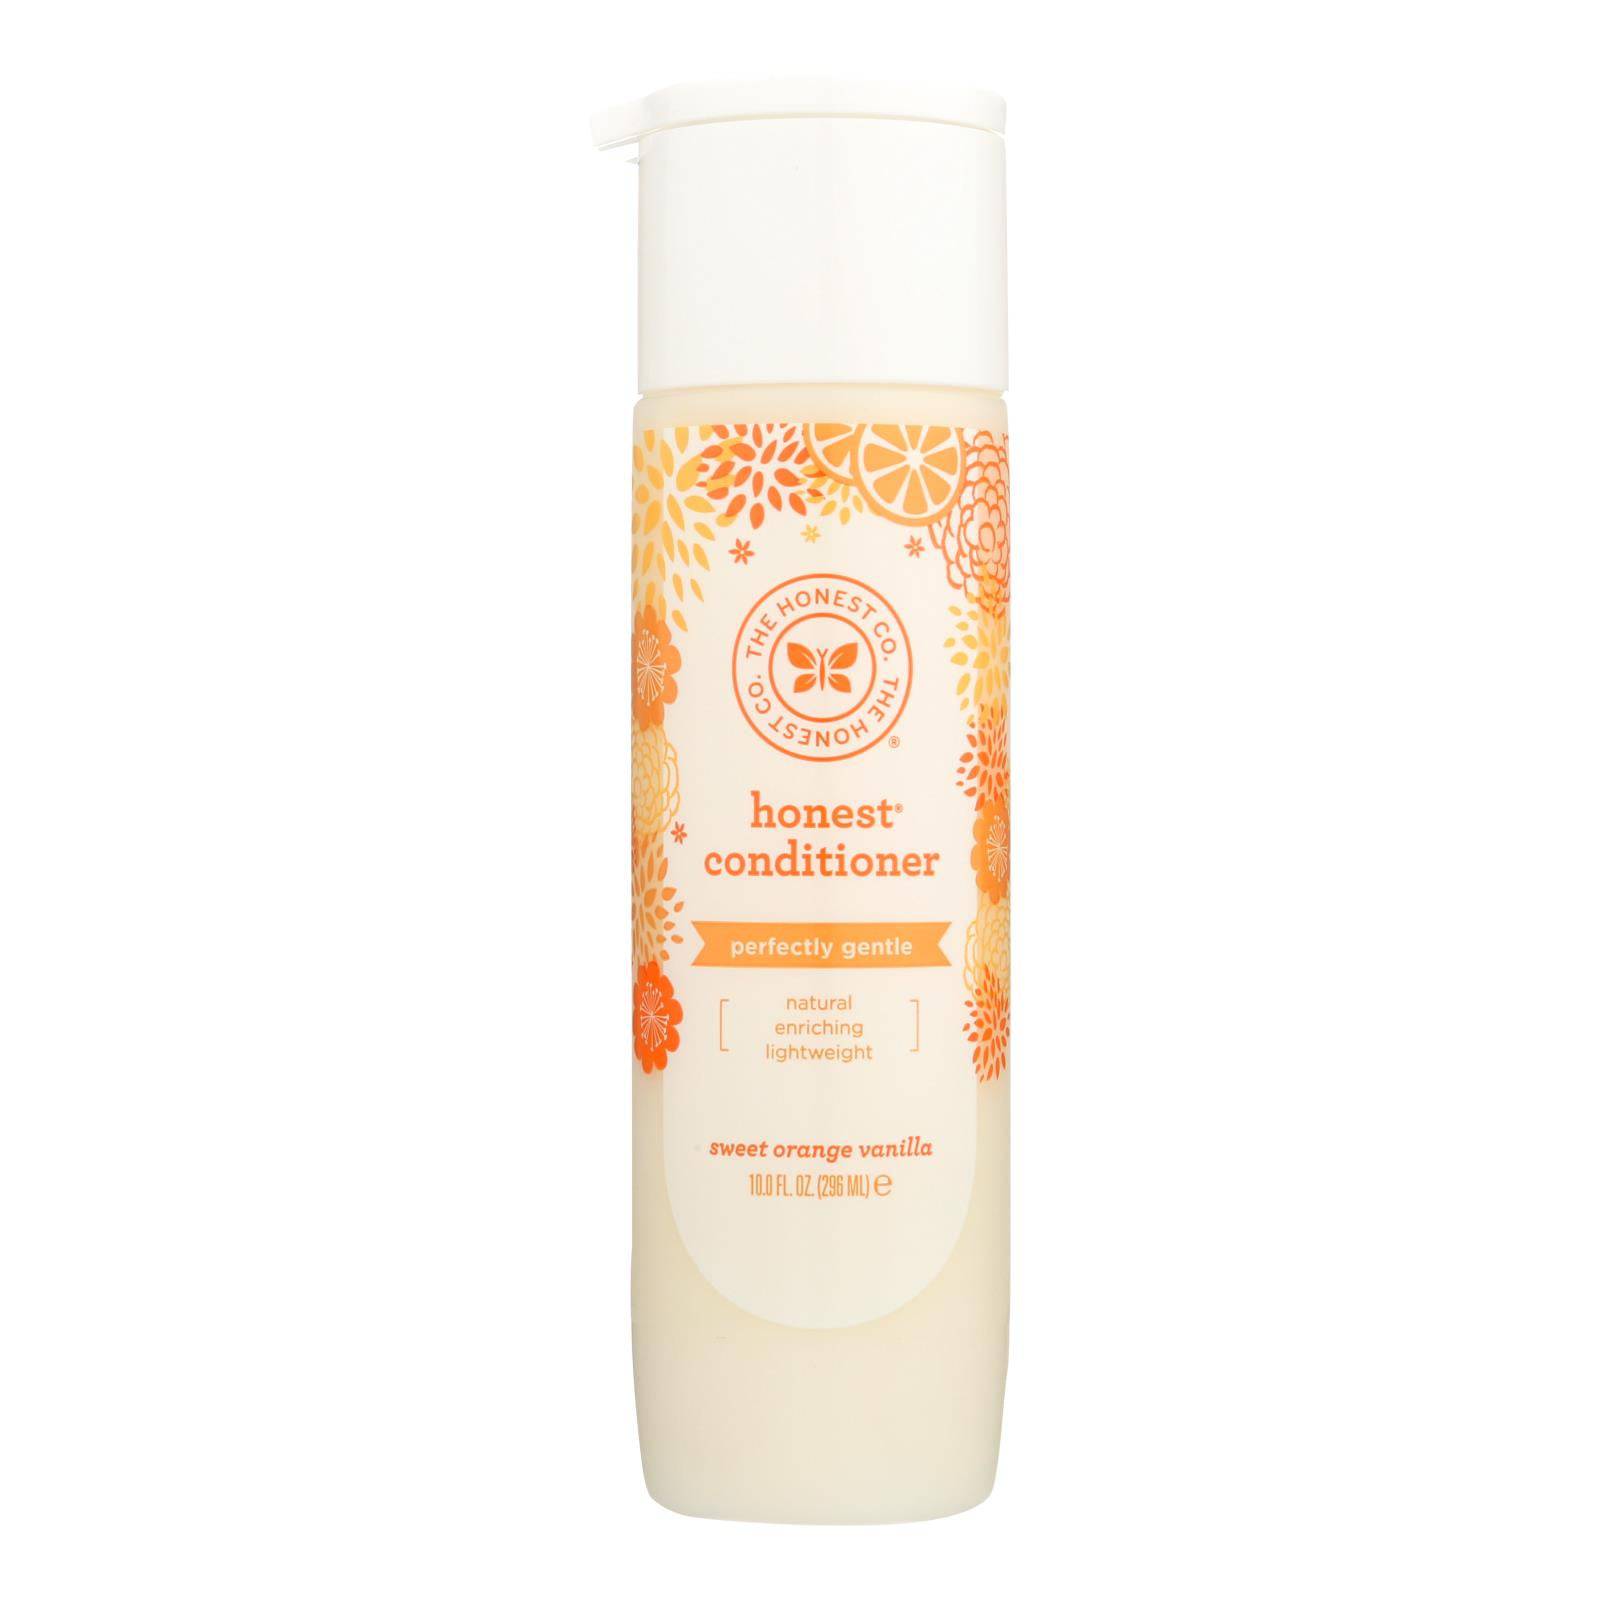 Buy The Honest Company Conditioner - Sweet Orange Vanilla - 10 Fl Oz.  at OnlyNaturals.us